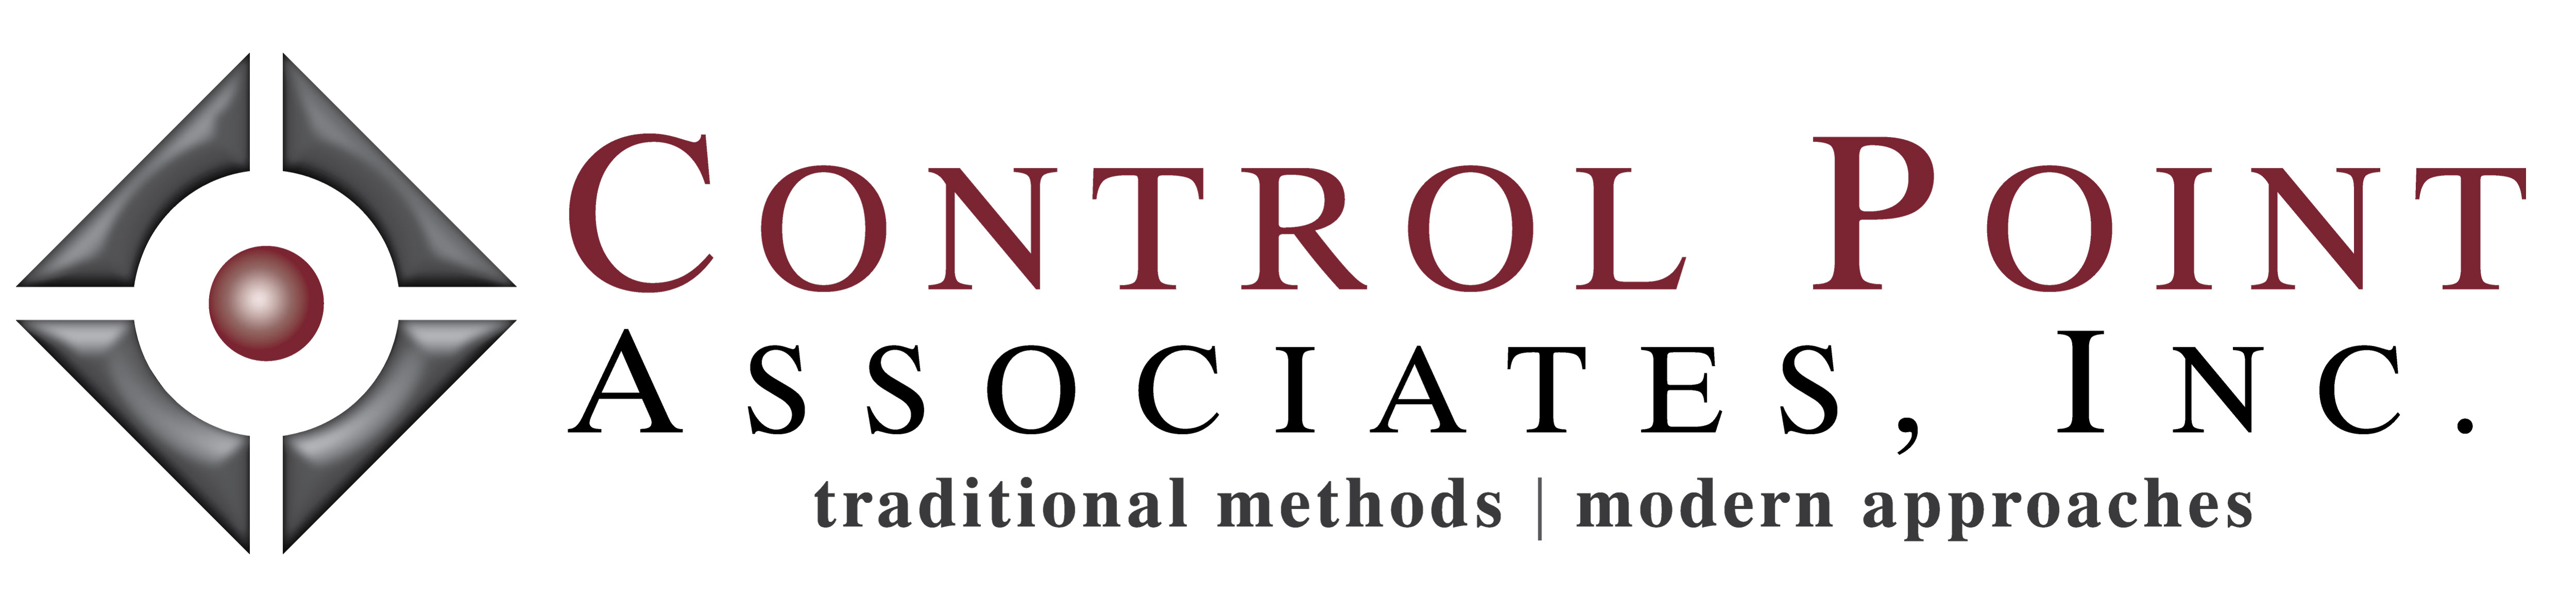 Control Point Associates, Inc. Logo